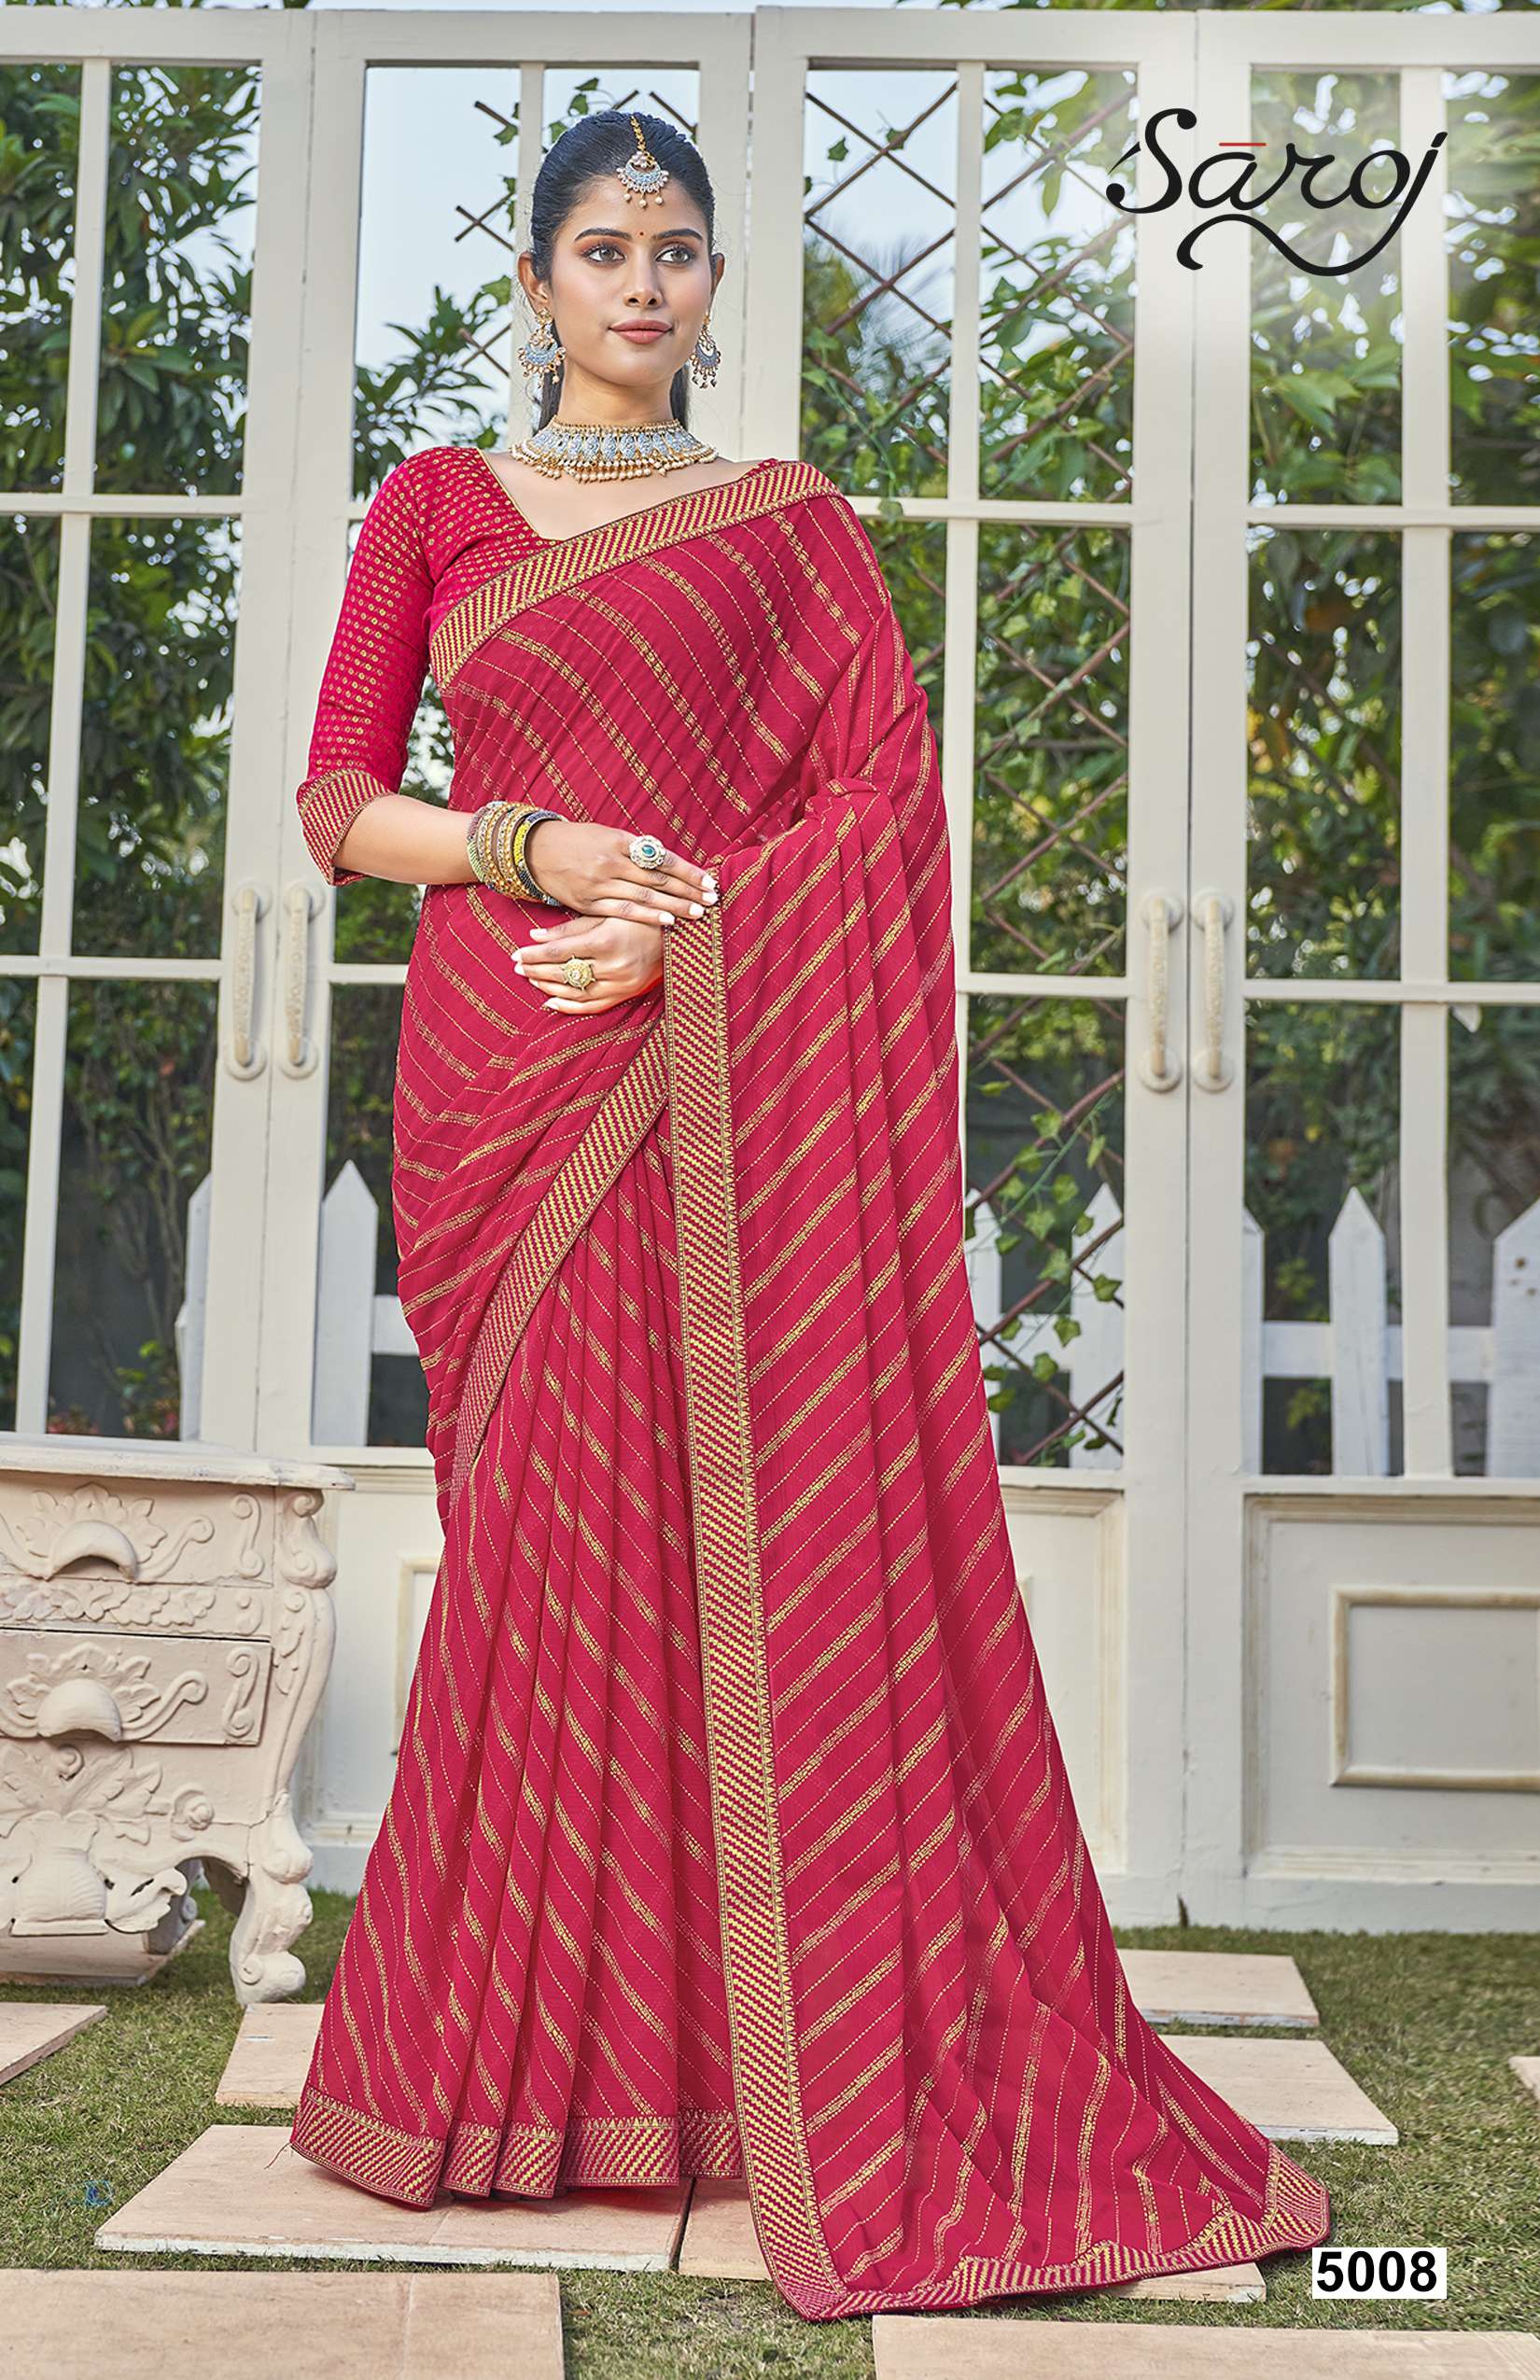 Saroj textile presents Madhubani Vol 5 casual sarees catalogue